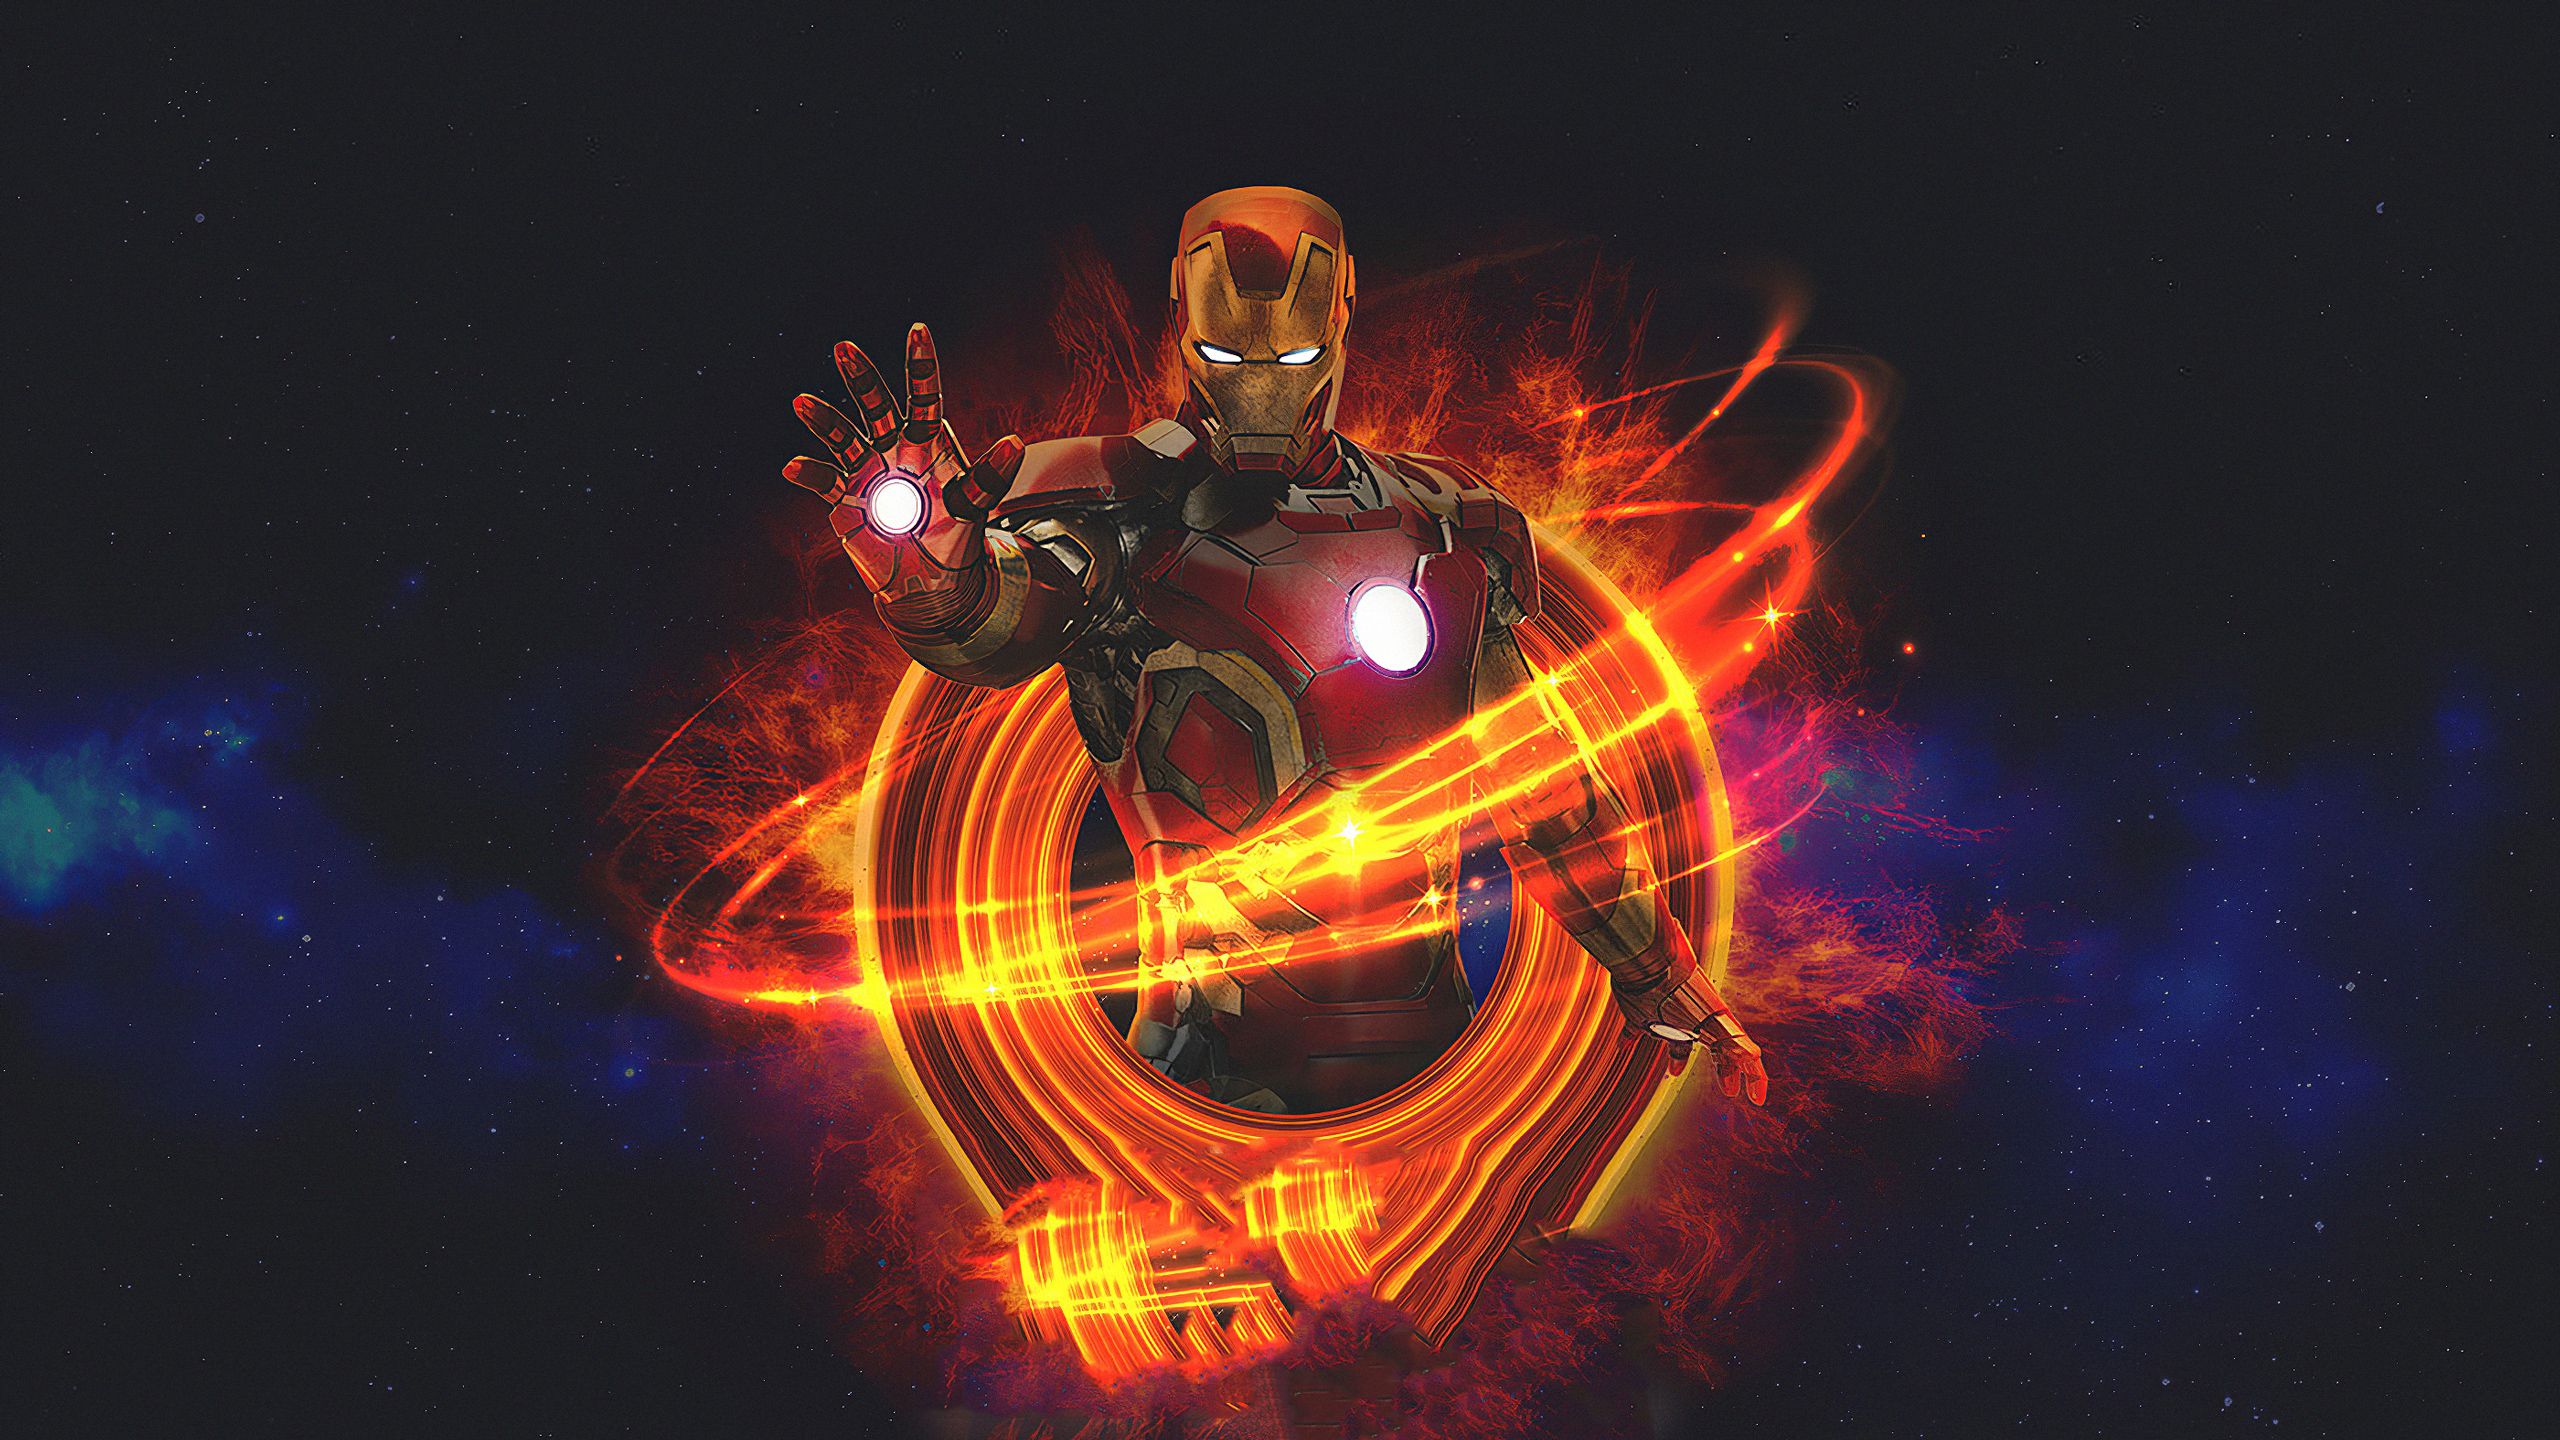 Marvel Iron Man Art Desktop Laptop HD Wallpaper, HD Superheroes 4K Wallpaper, Image, Photo and Background